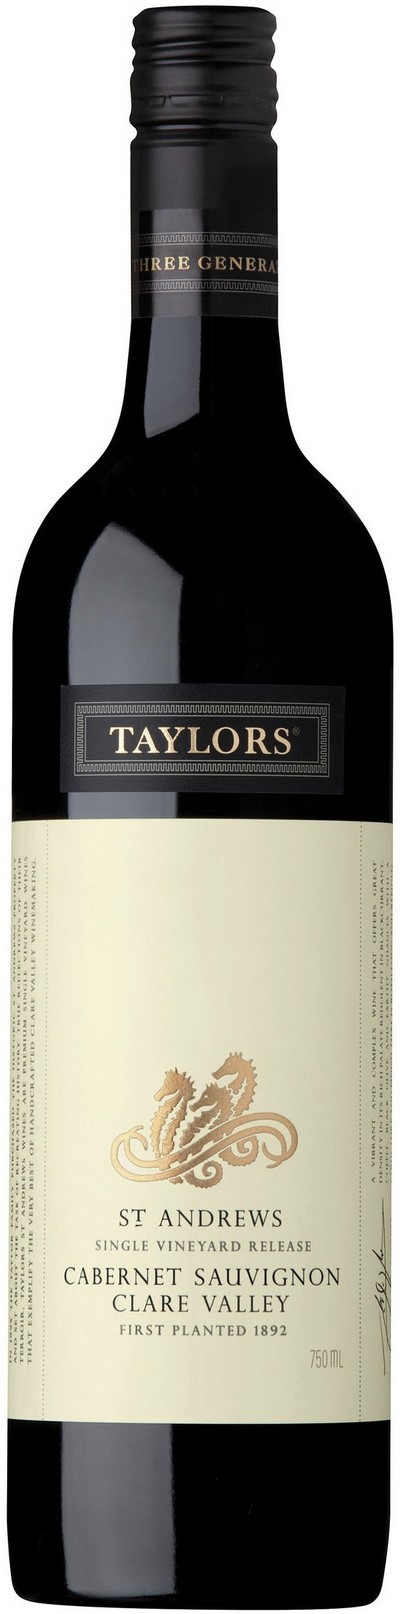 taylors-st-andrews-cabernet-sauvignon-2014